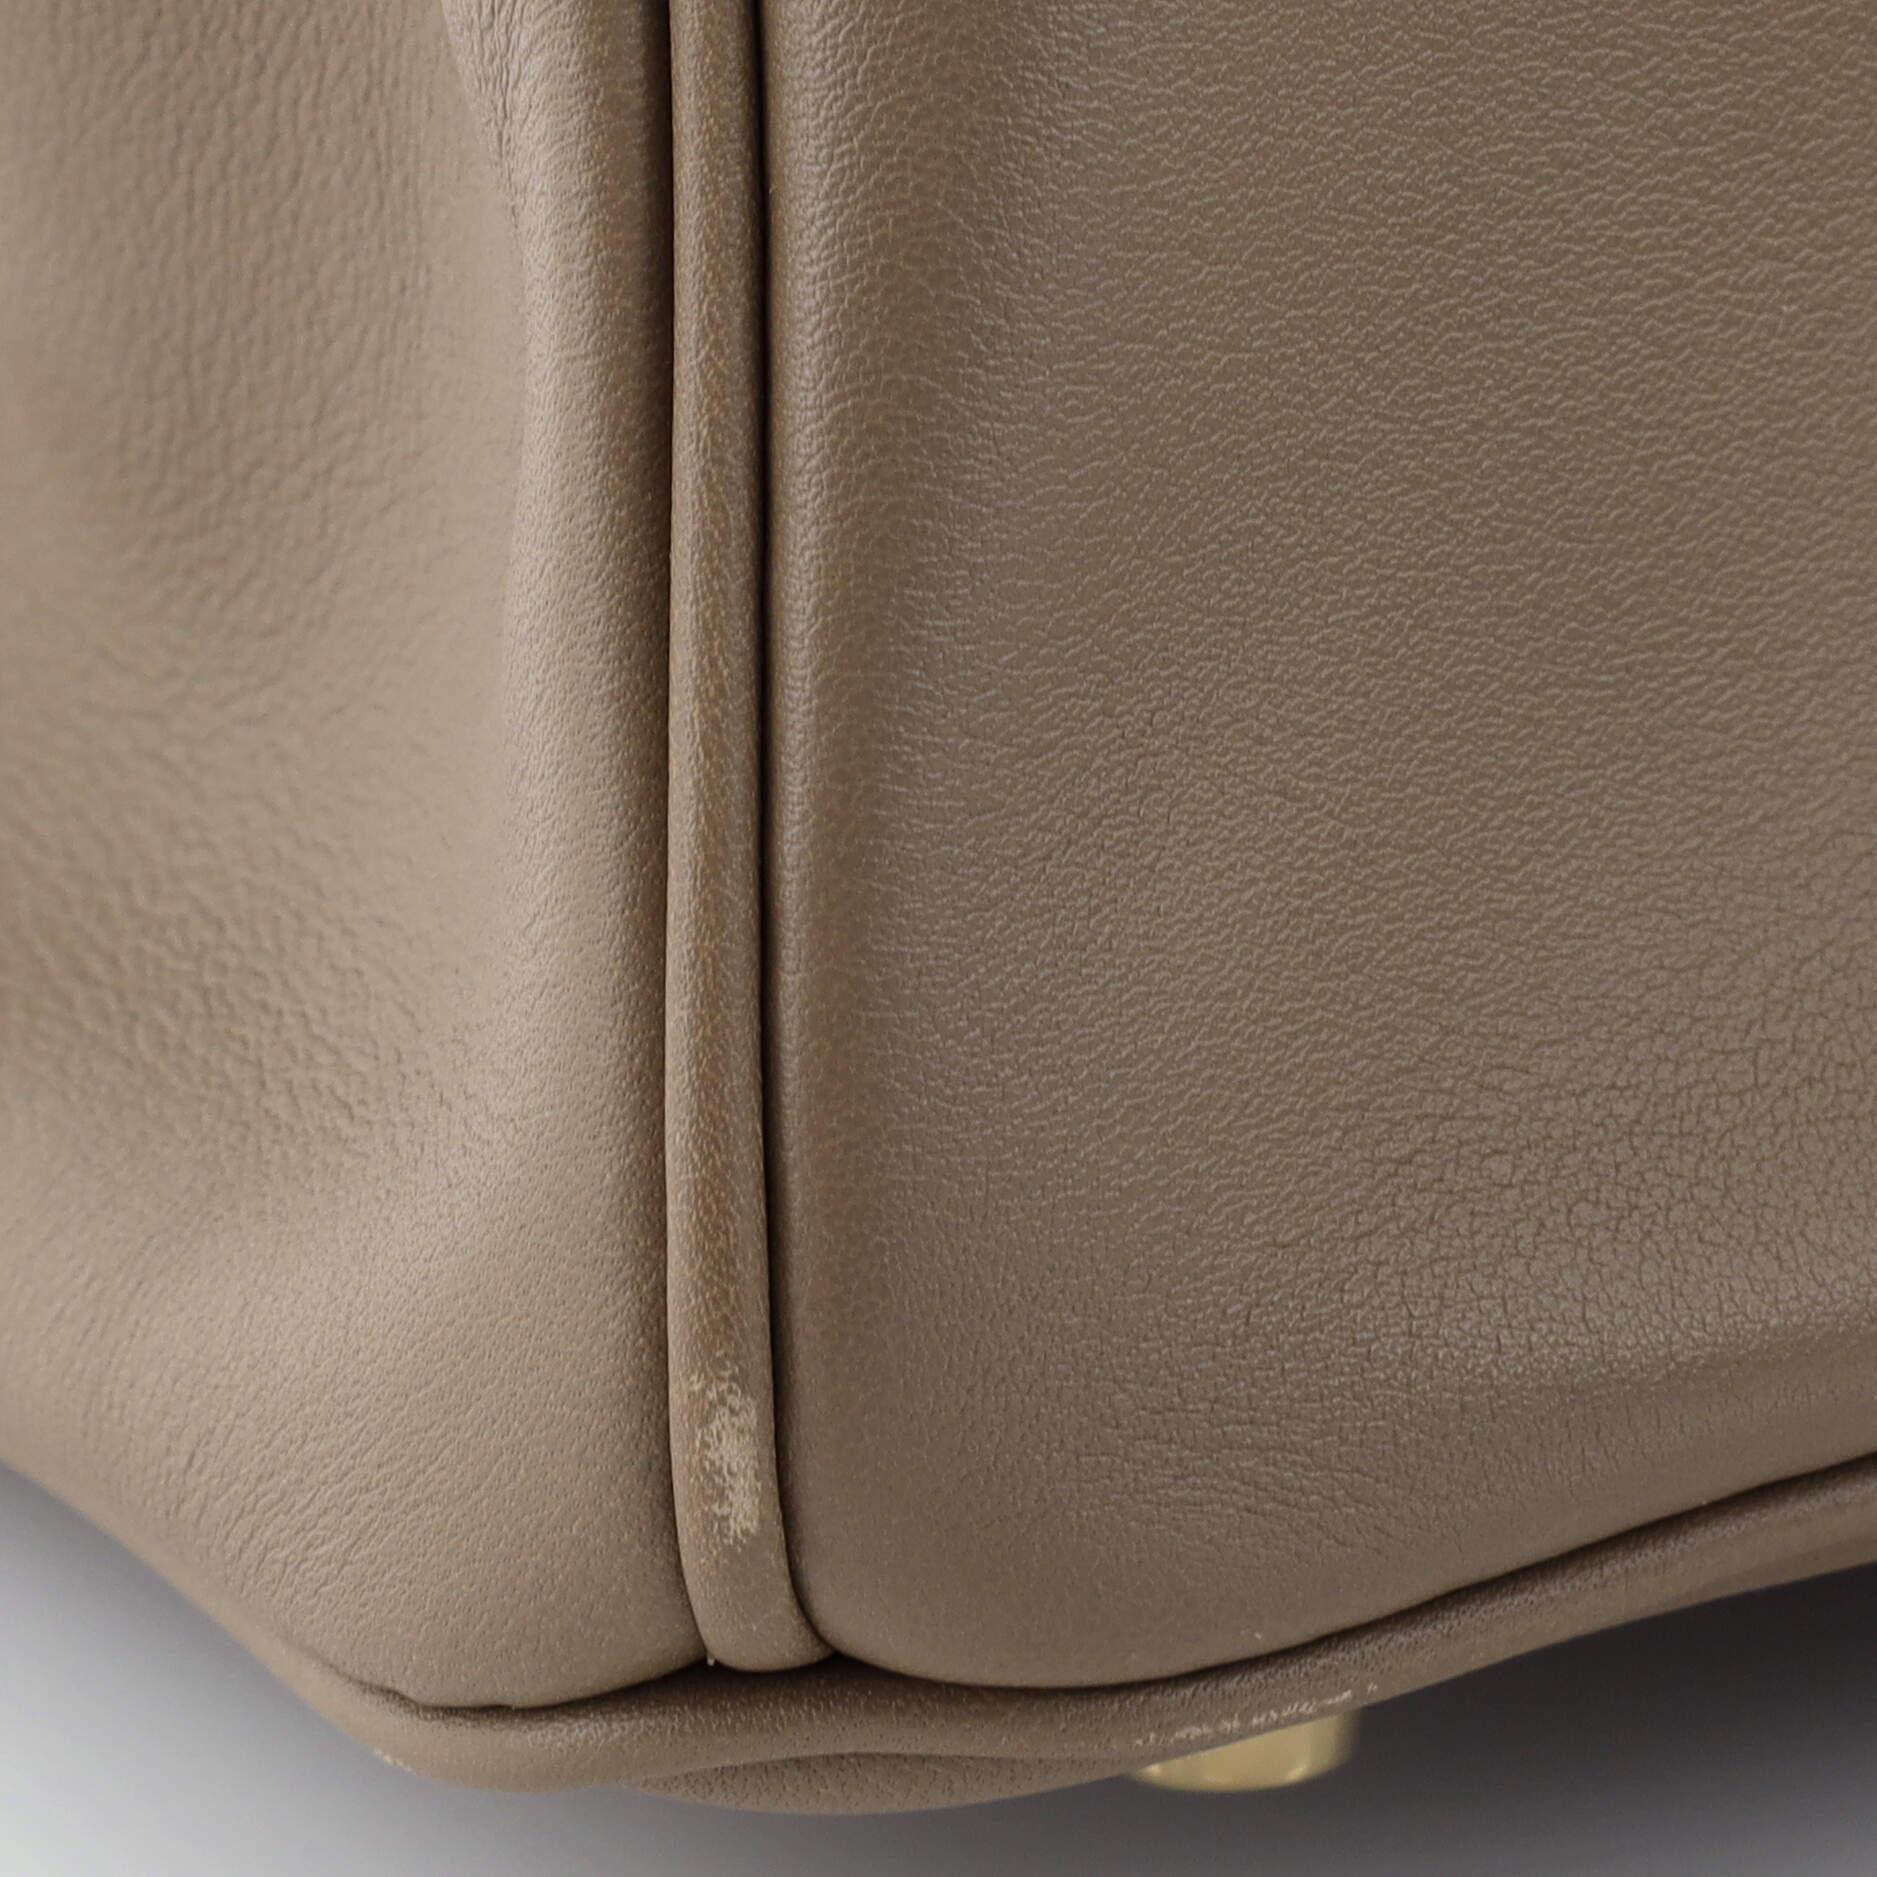 Hermes Birkin Handbag Grey Swift with Gold Hardware 25 5